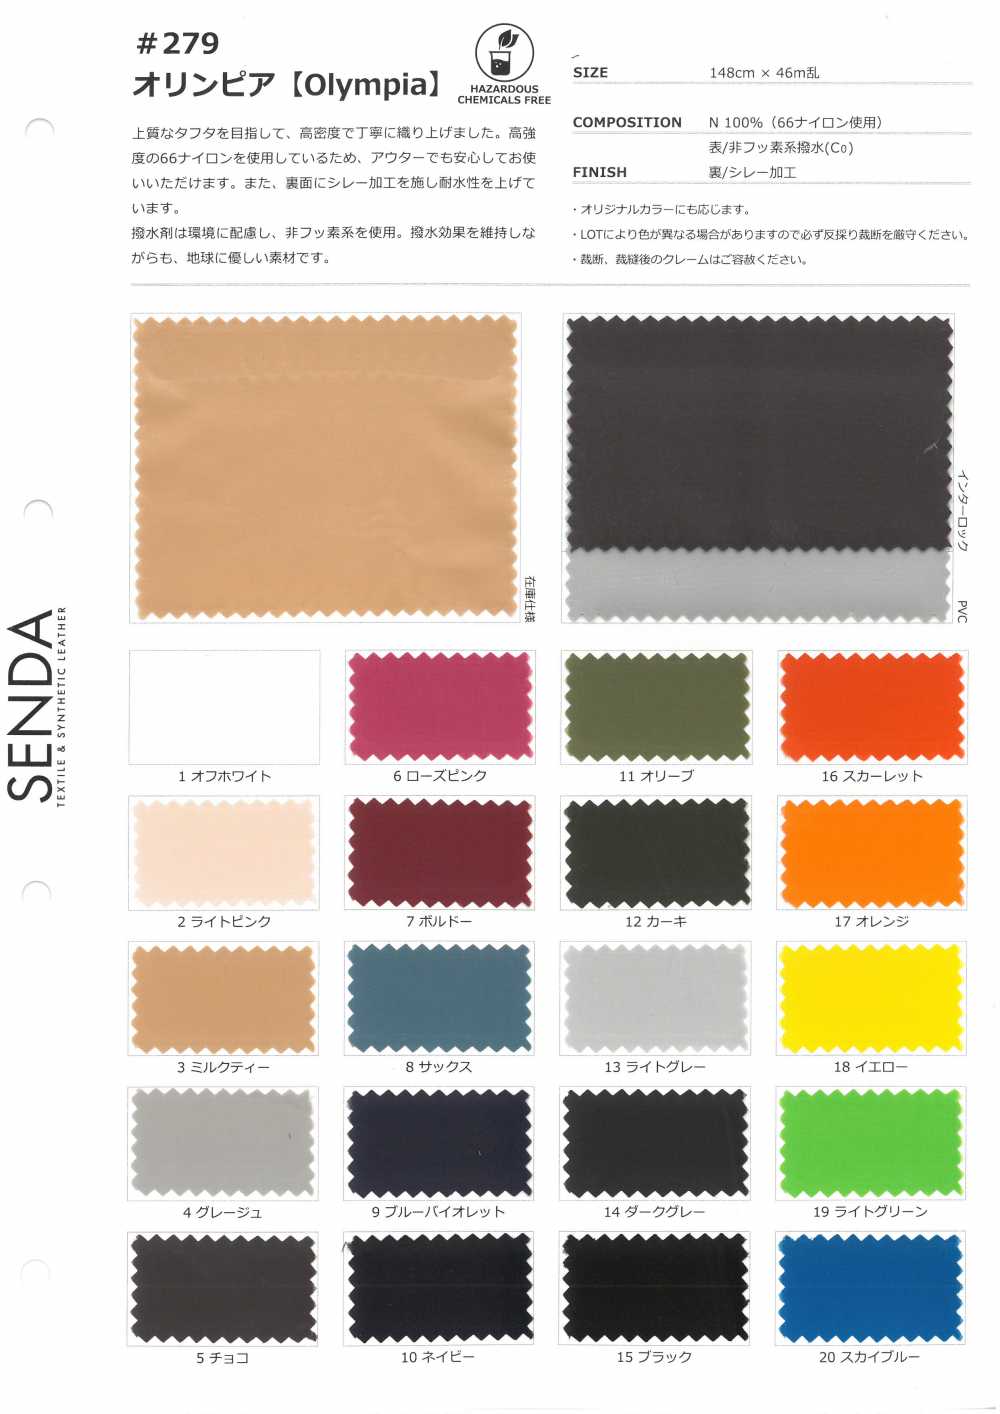 279 Olympia[Textile / Fabric] SENDA